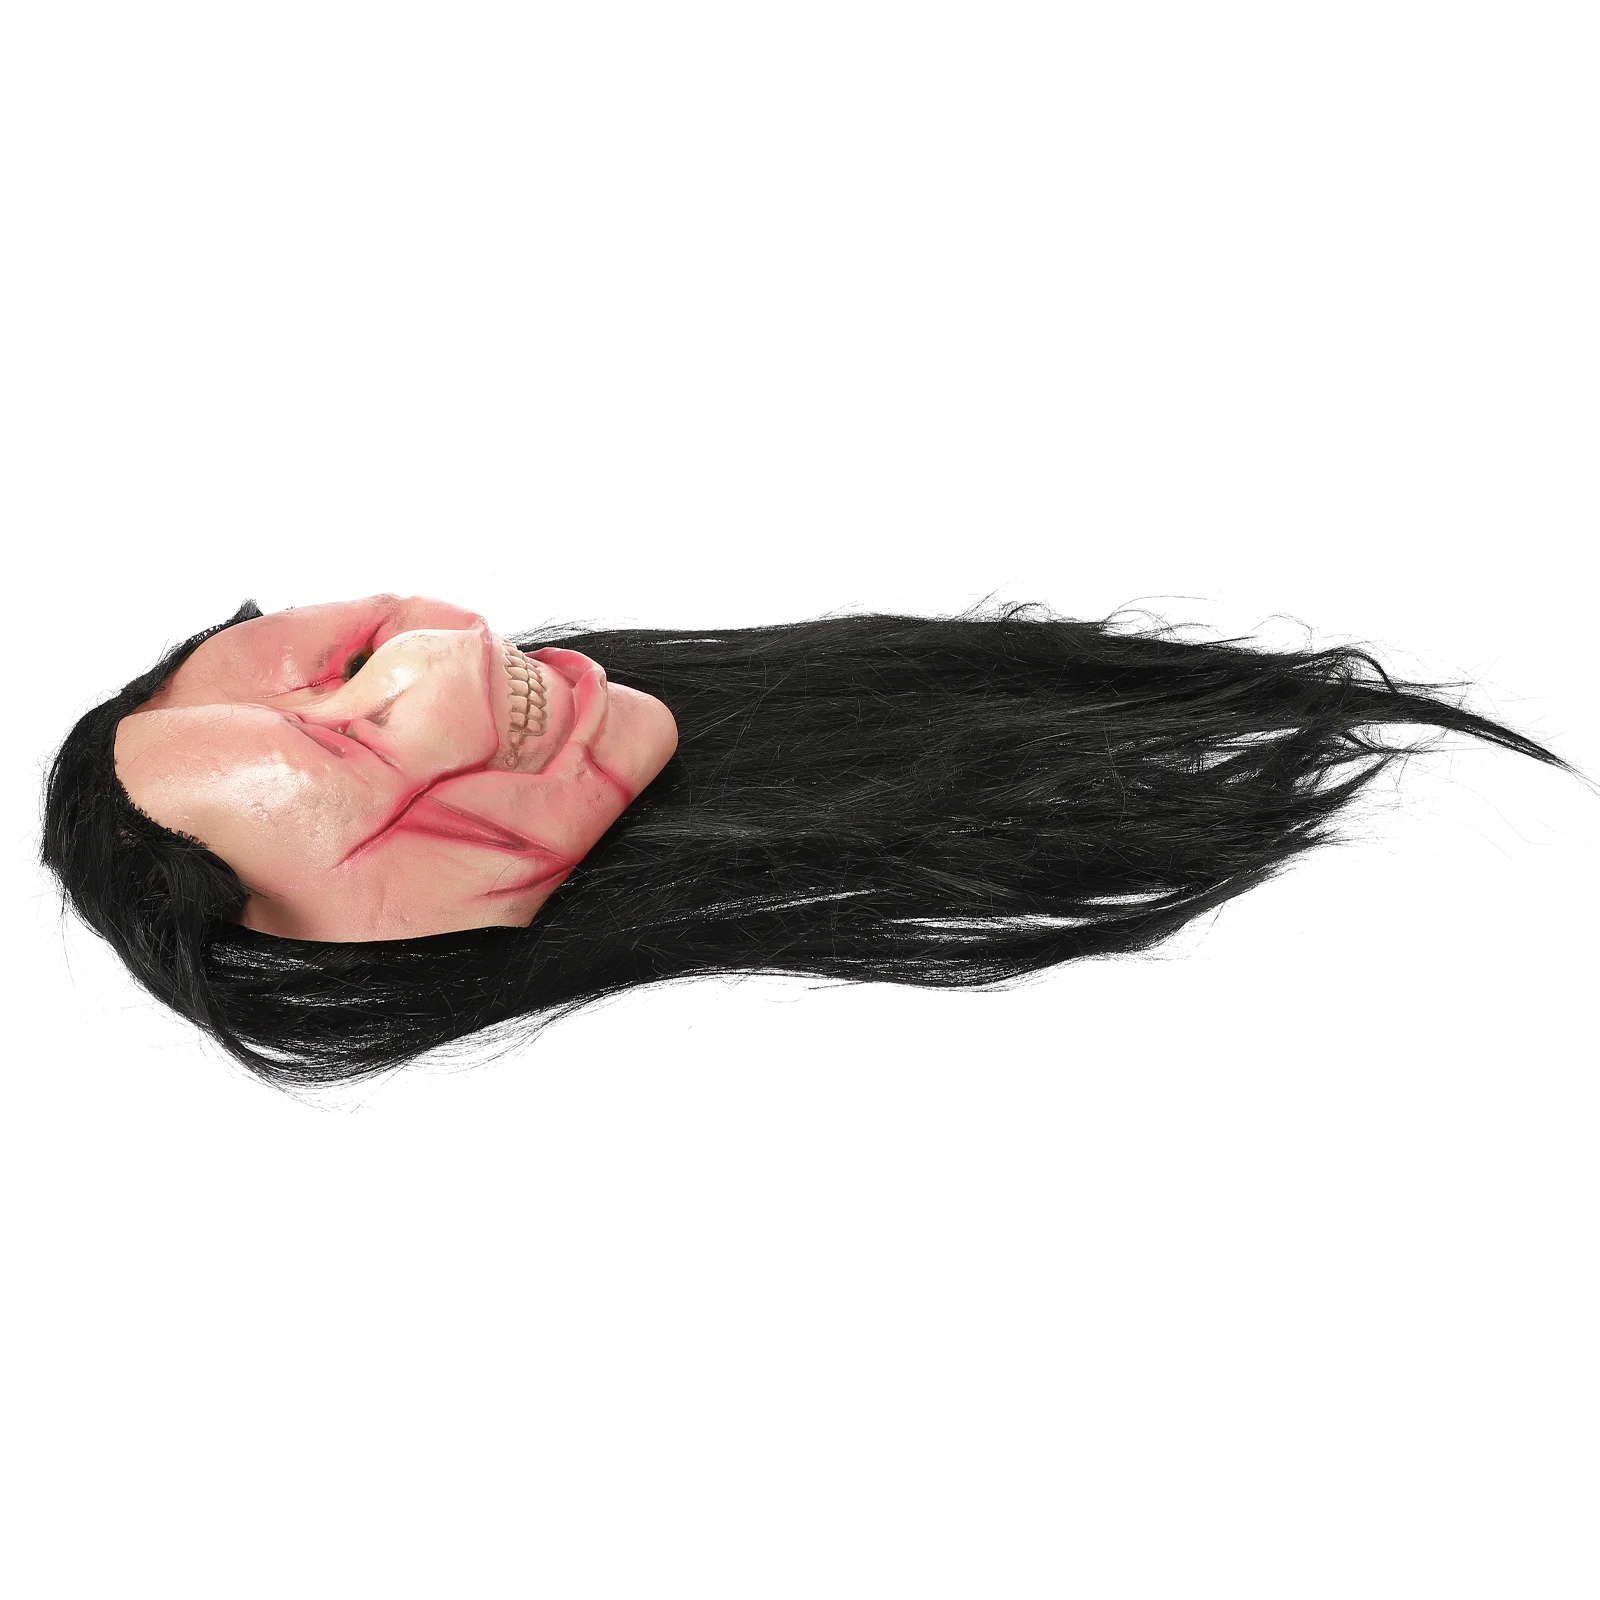 

Horror Long Hair Bad Face Latex Demon Mask Halloween Party Scary Creepy Adults Prop Horrific Decor Masks Realistic